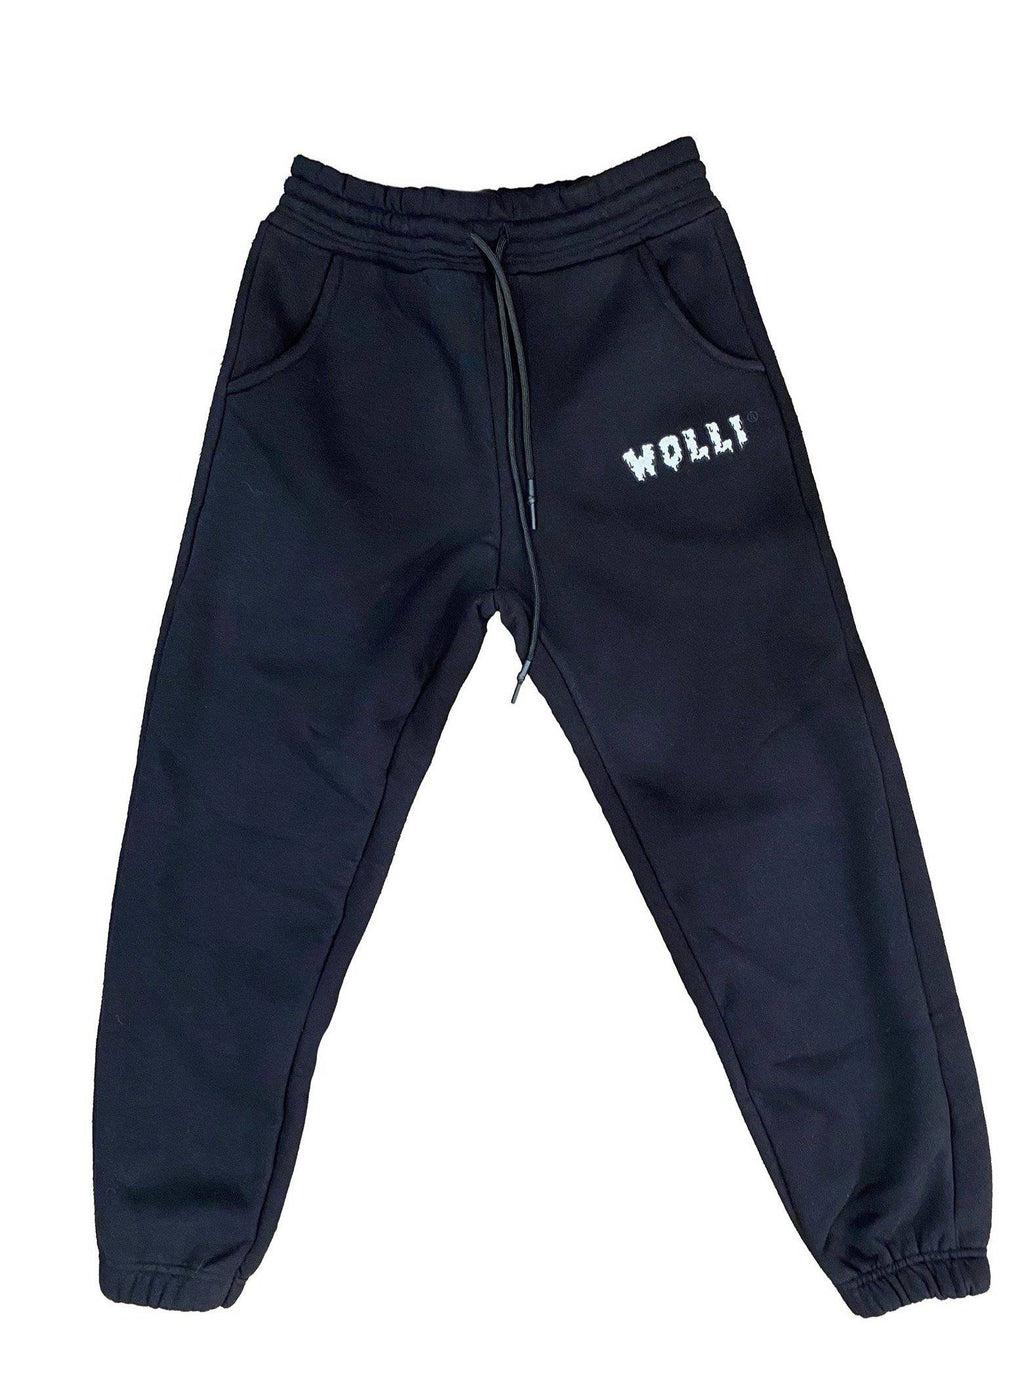 Pantalone tuta felpato nero - Wolli®